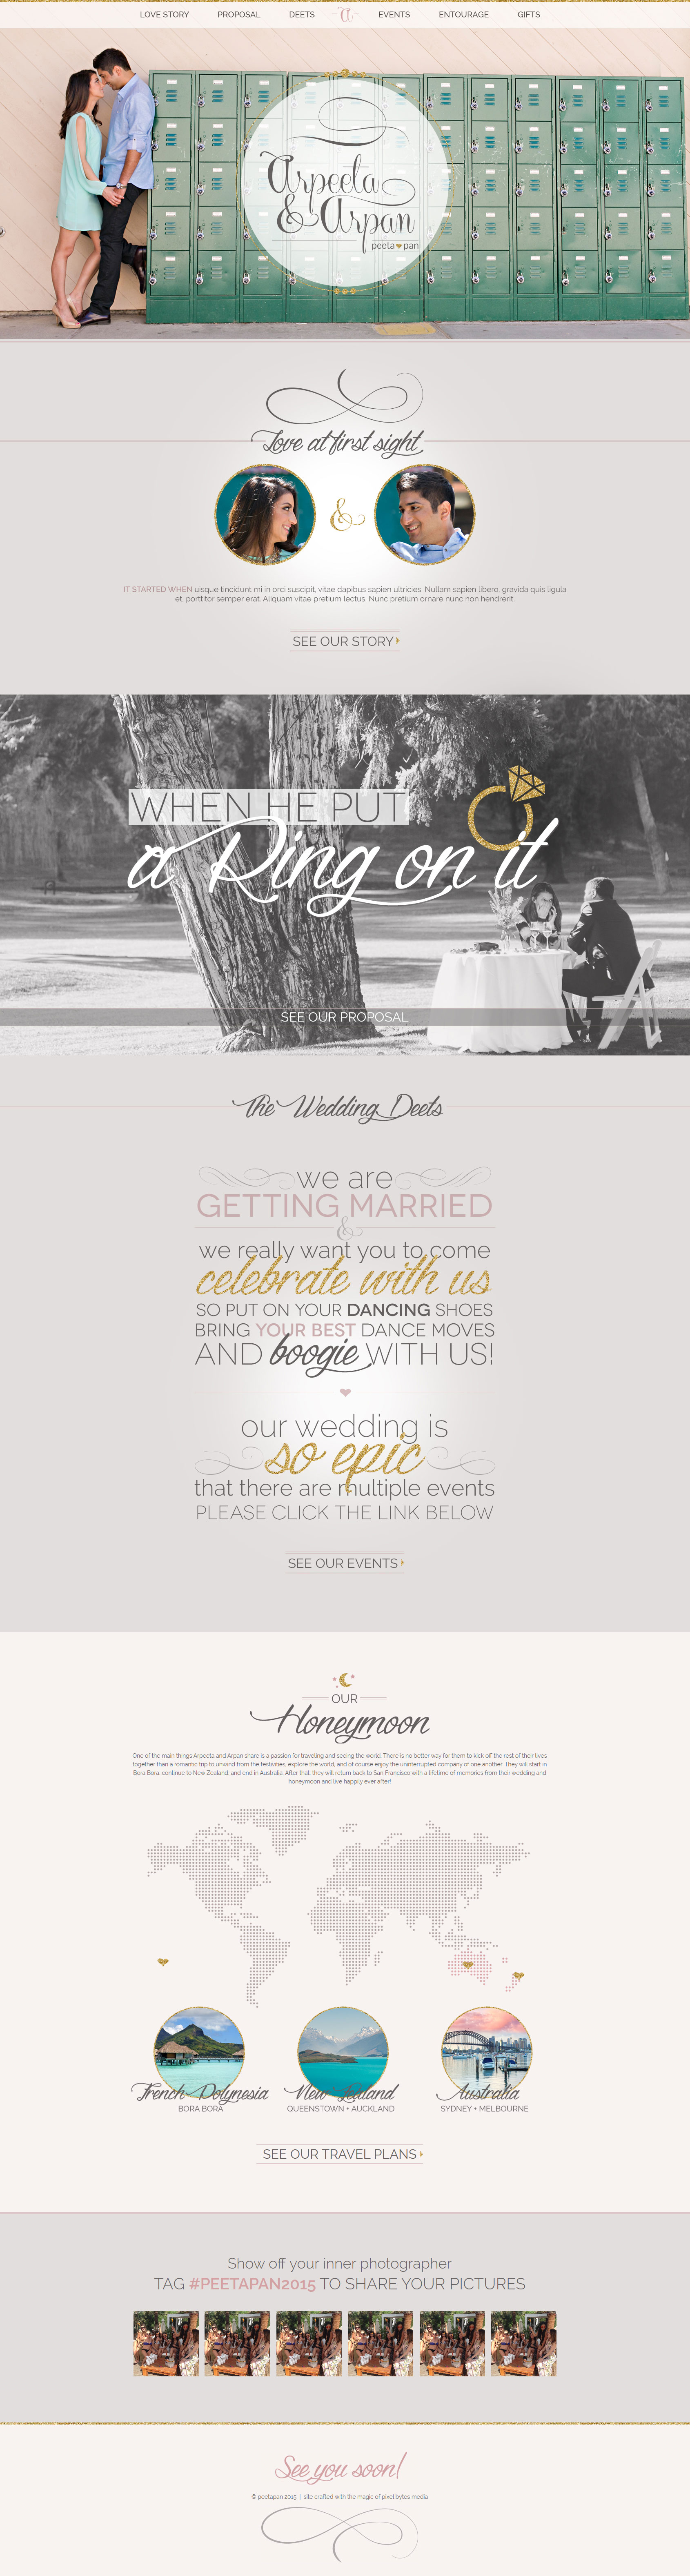 Wedding Website Design with multi-event RSVP